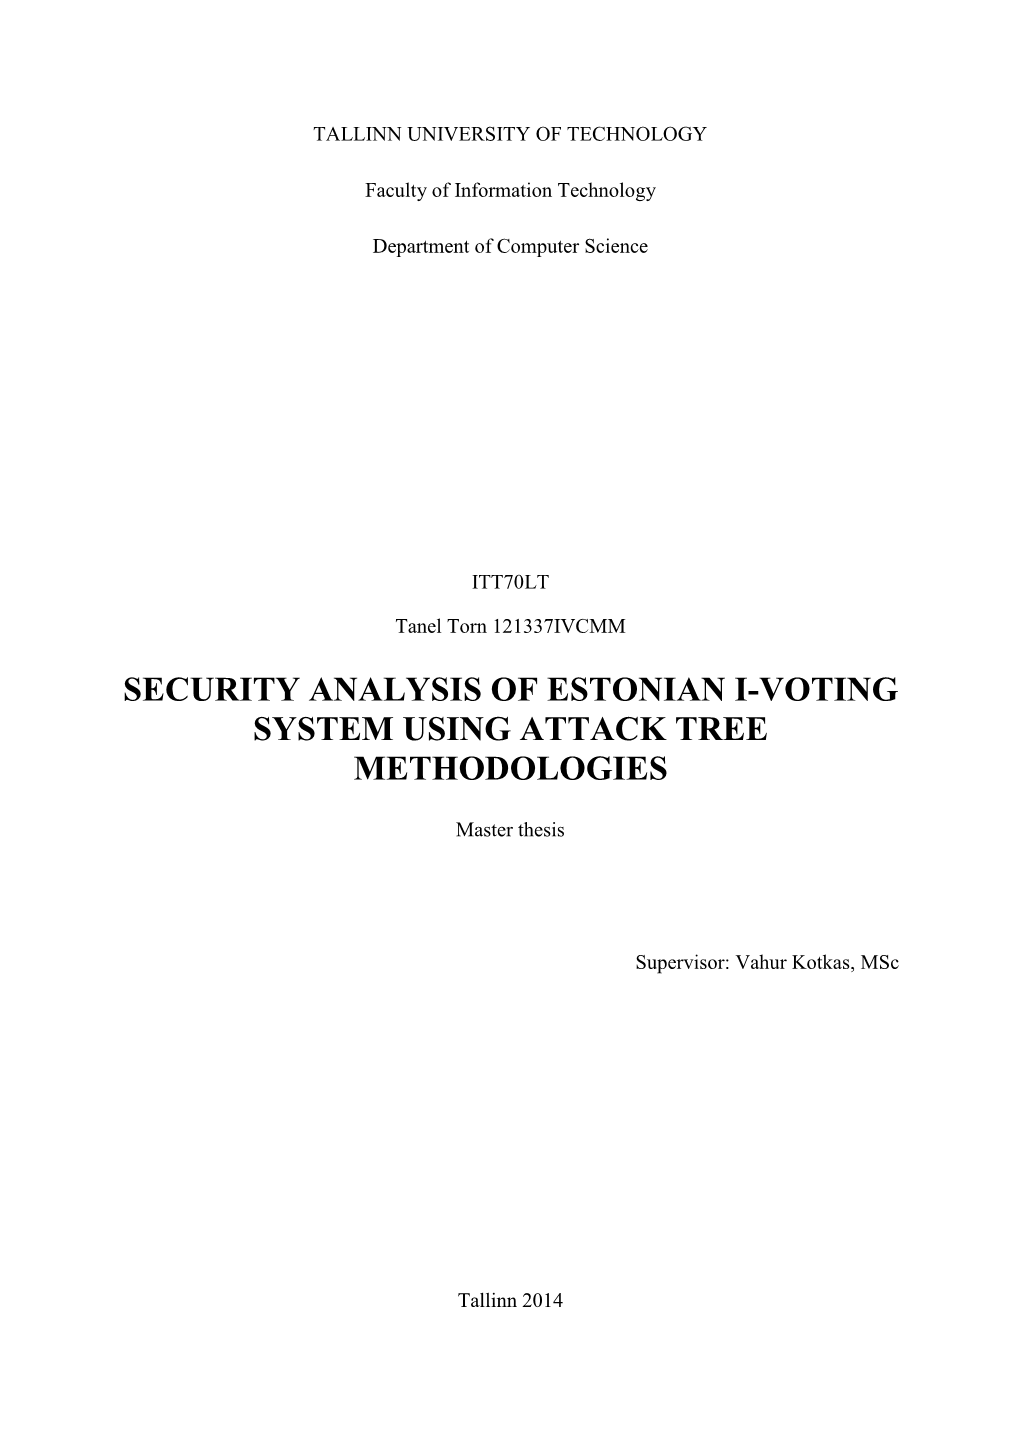 Security Analysis of Estonian I-Voting System Using Attack Tree Methodologies